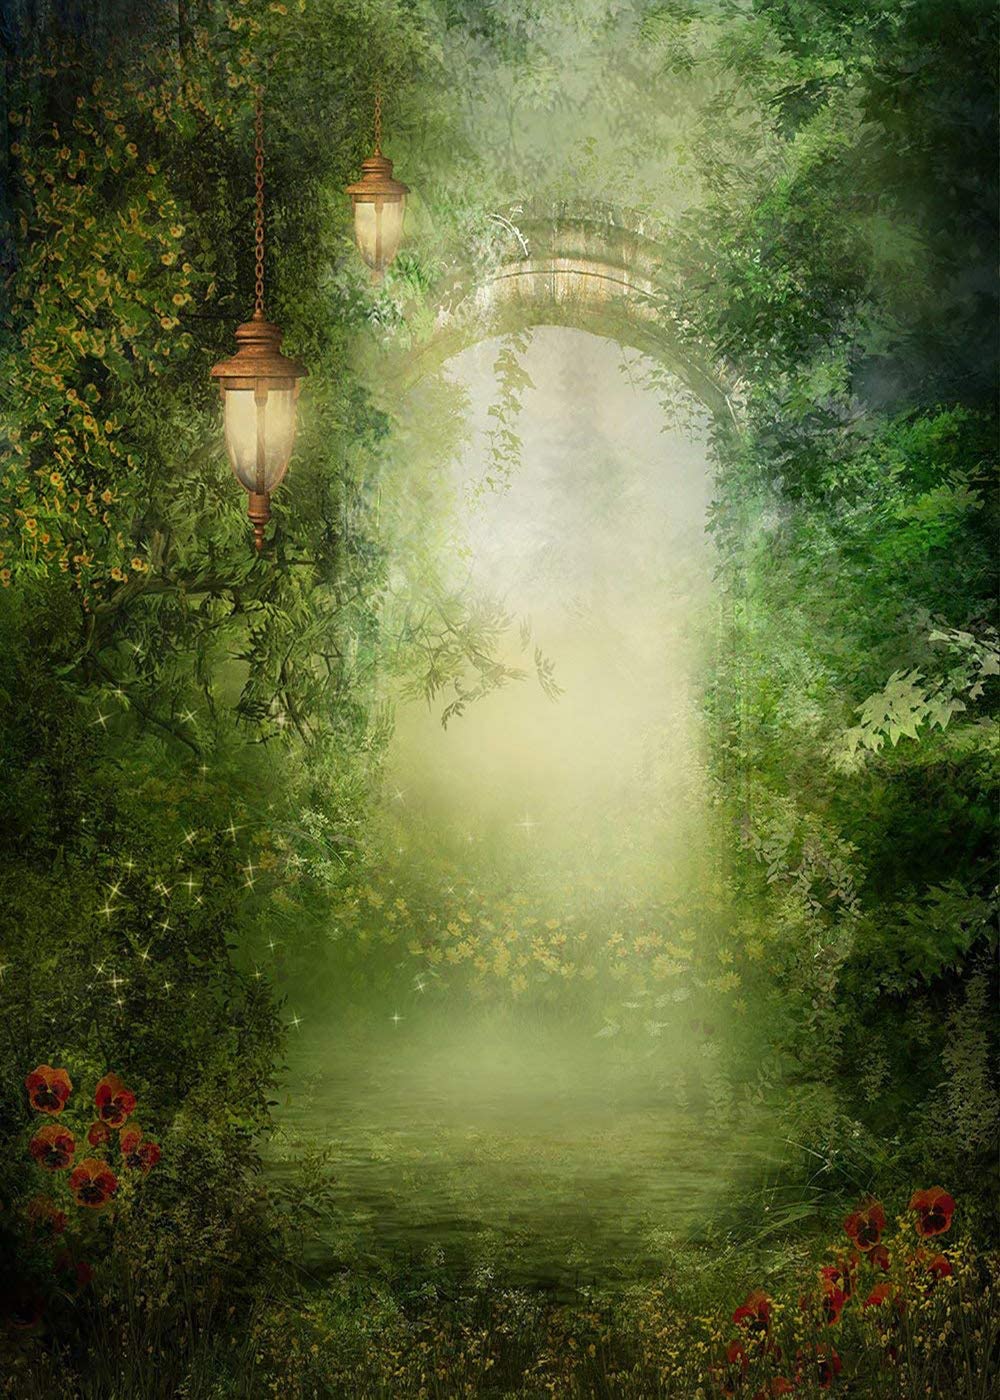 Lightning Deals Kate Spring Green Dreamlike Fairytale Forest Backdrop for Photoshoot